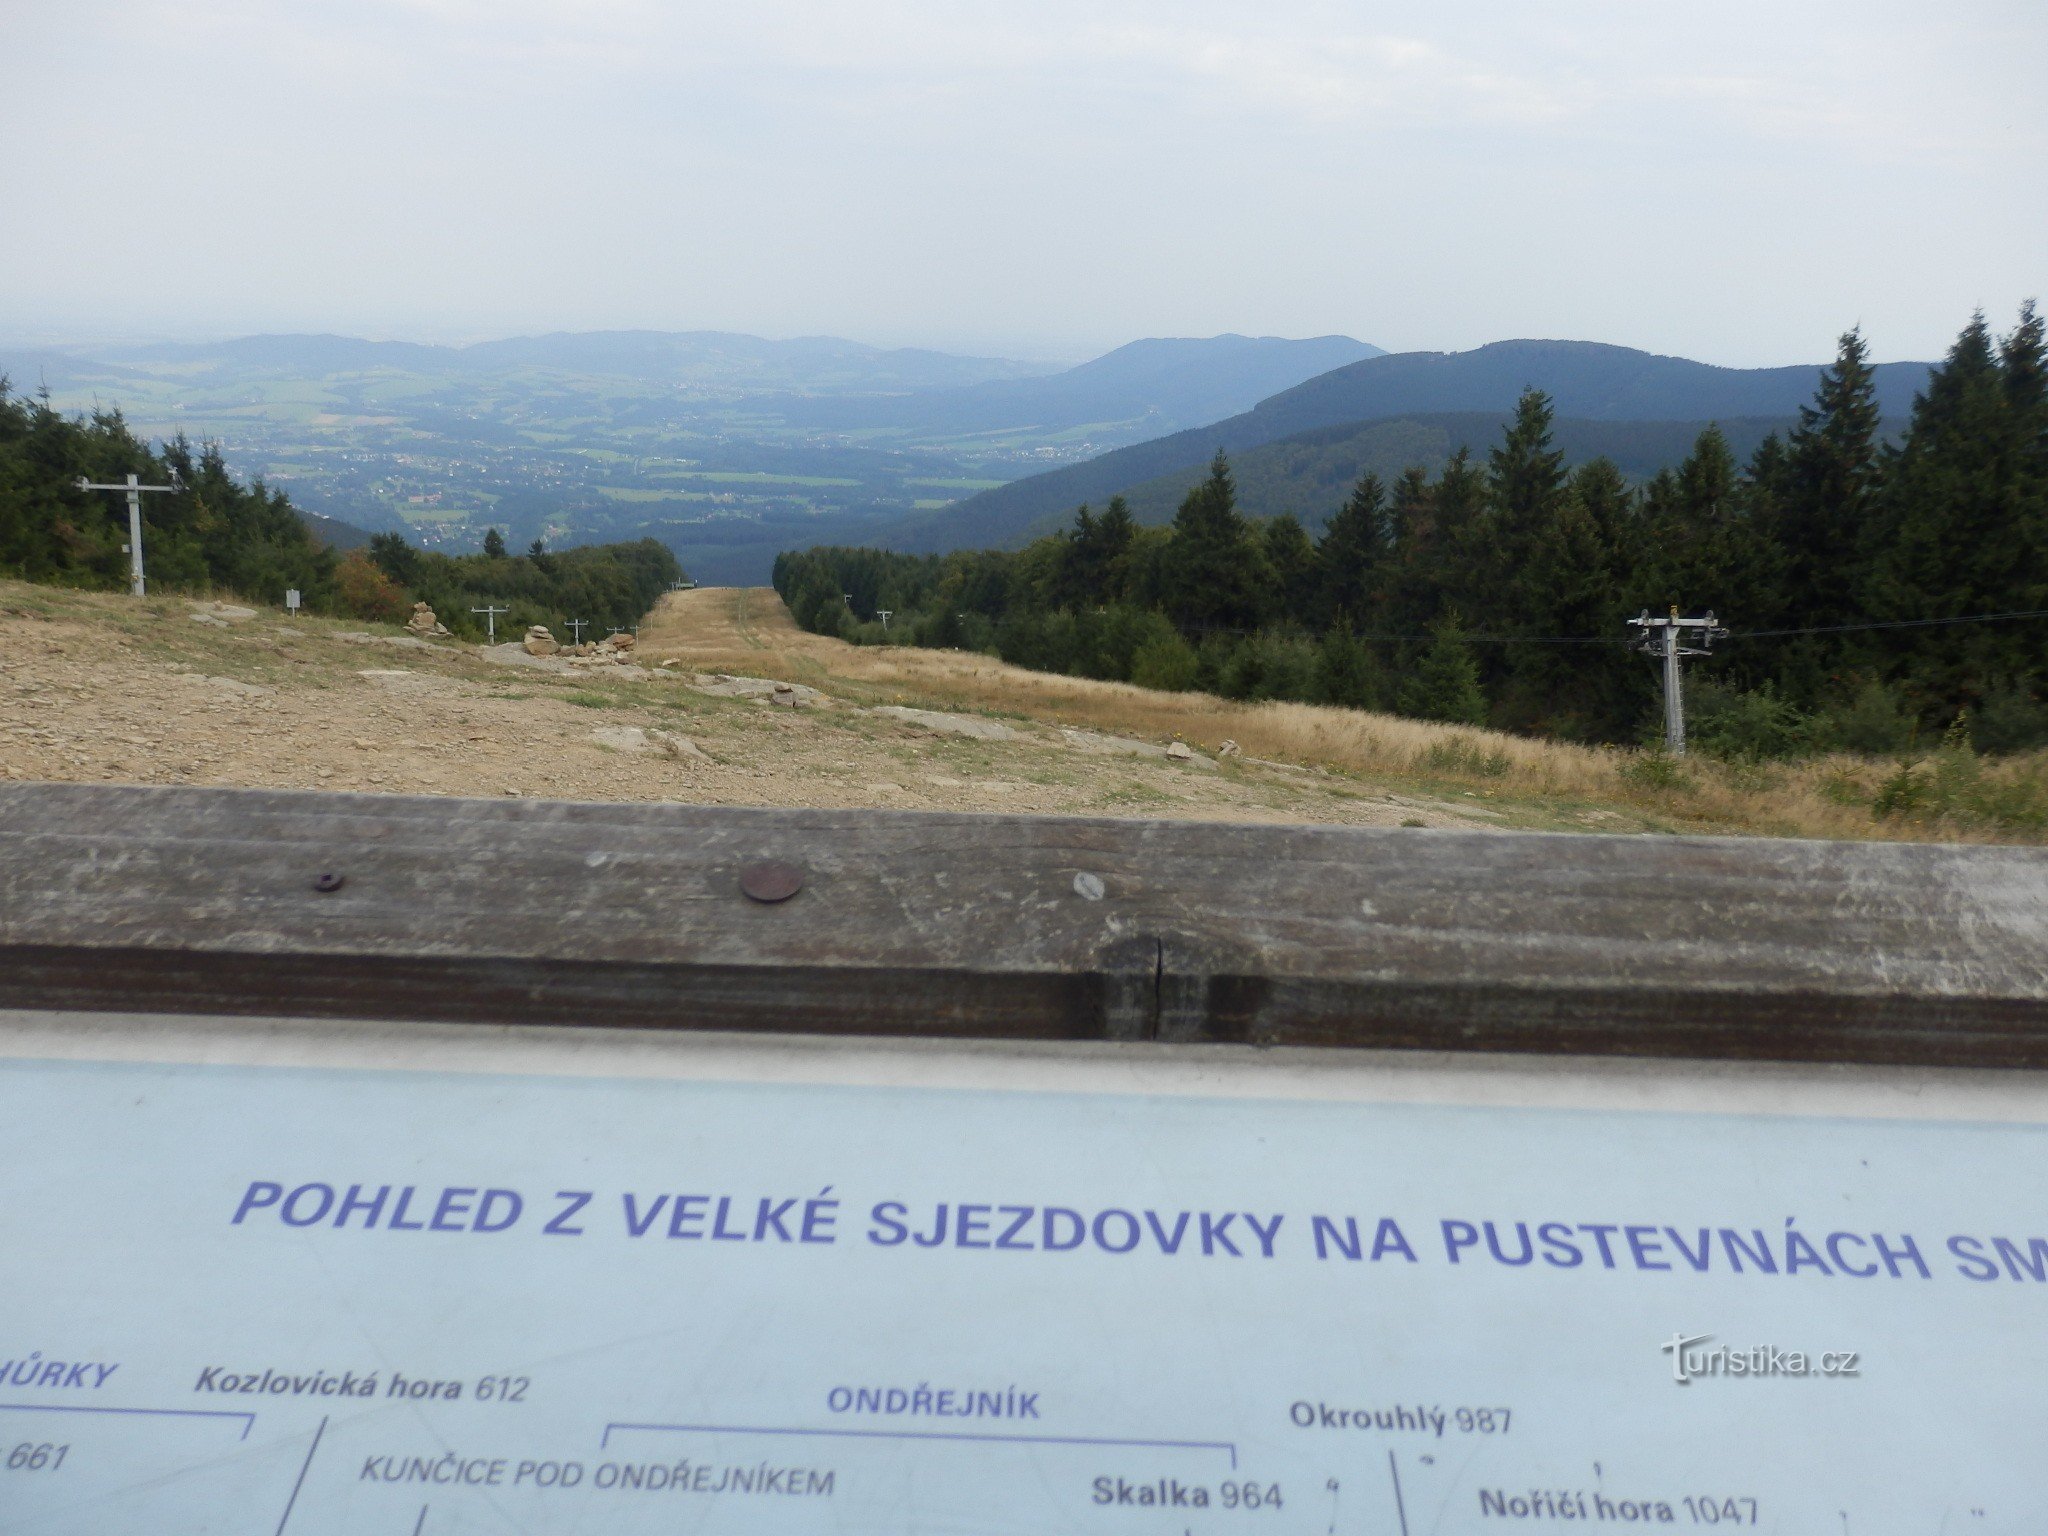 Đi bộ từ Pusteven đến Radhošť